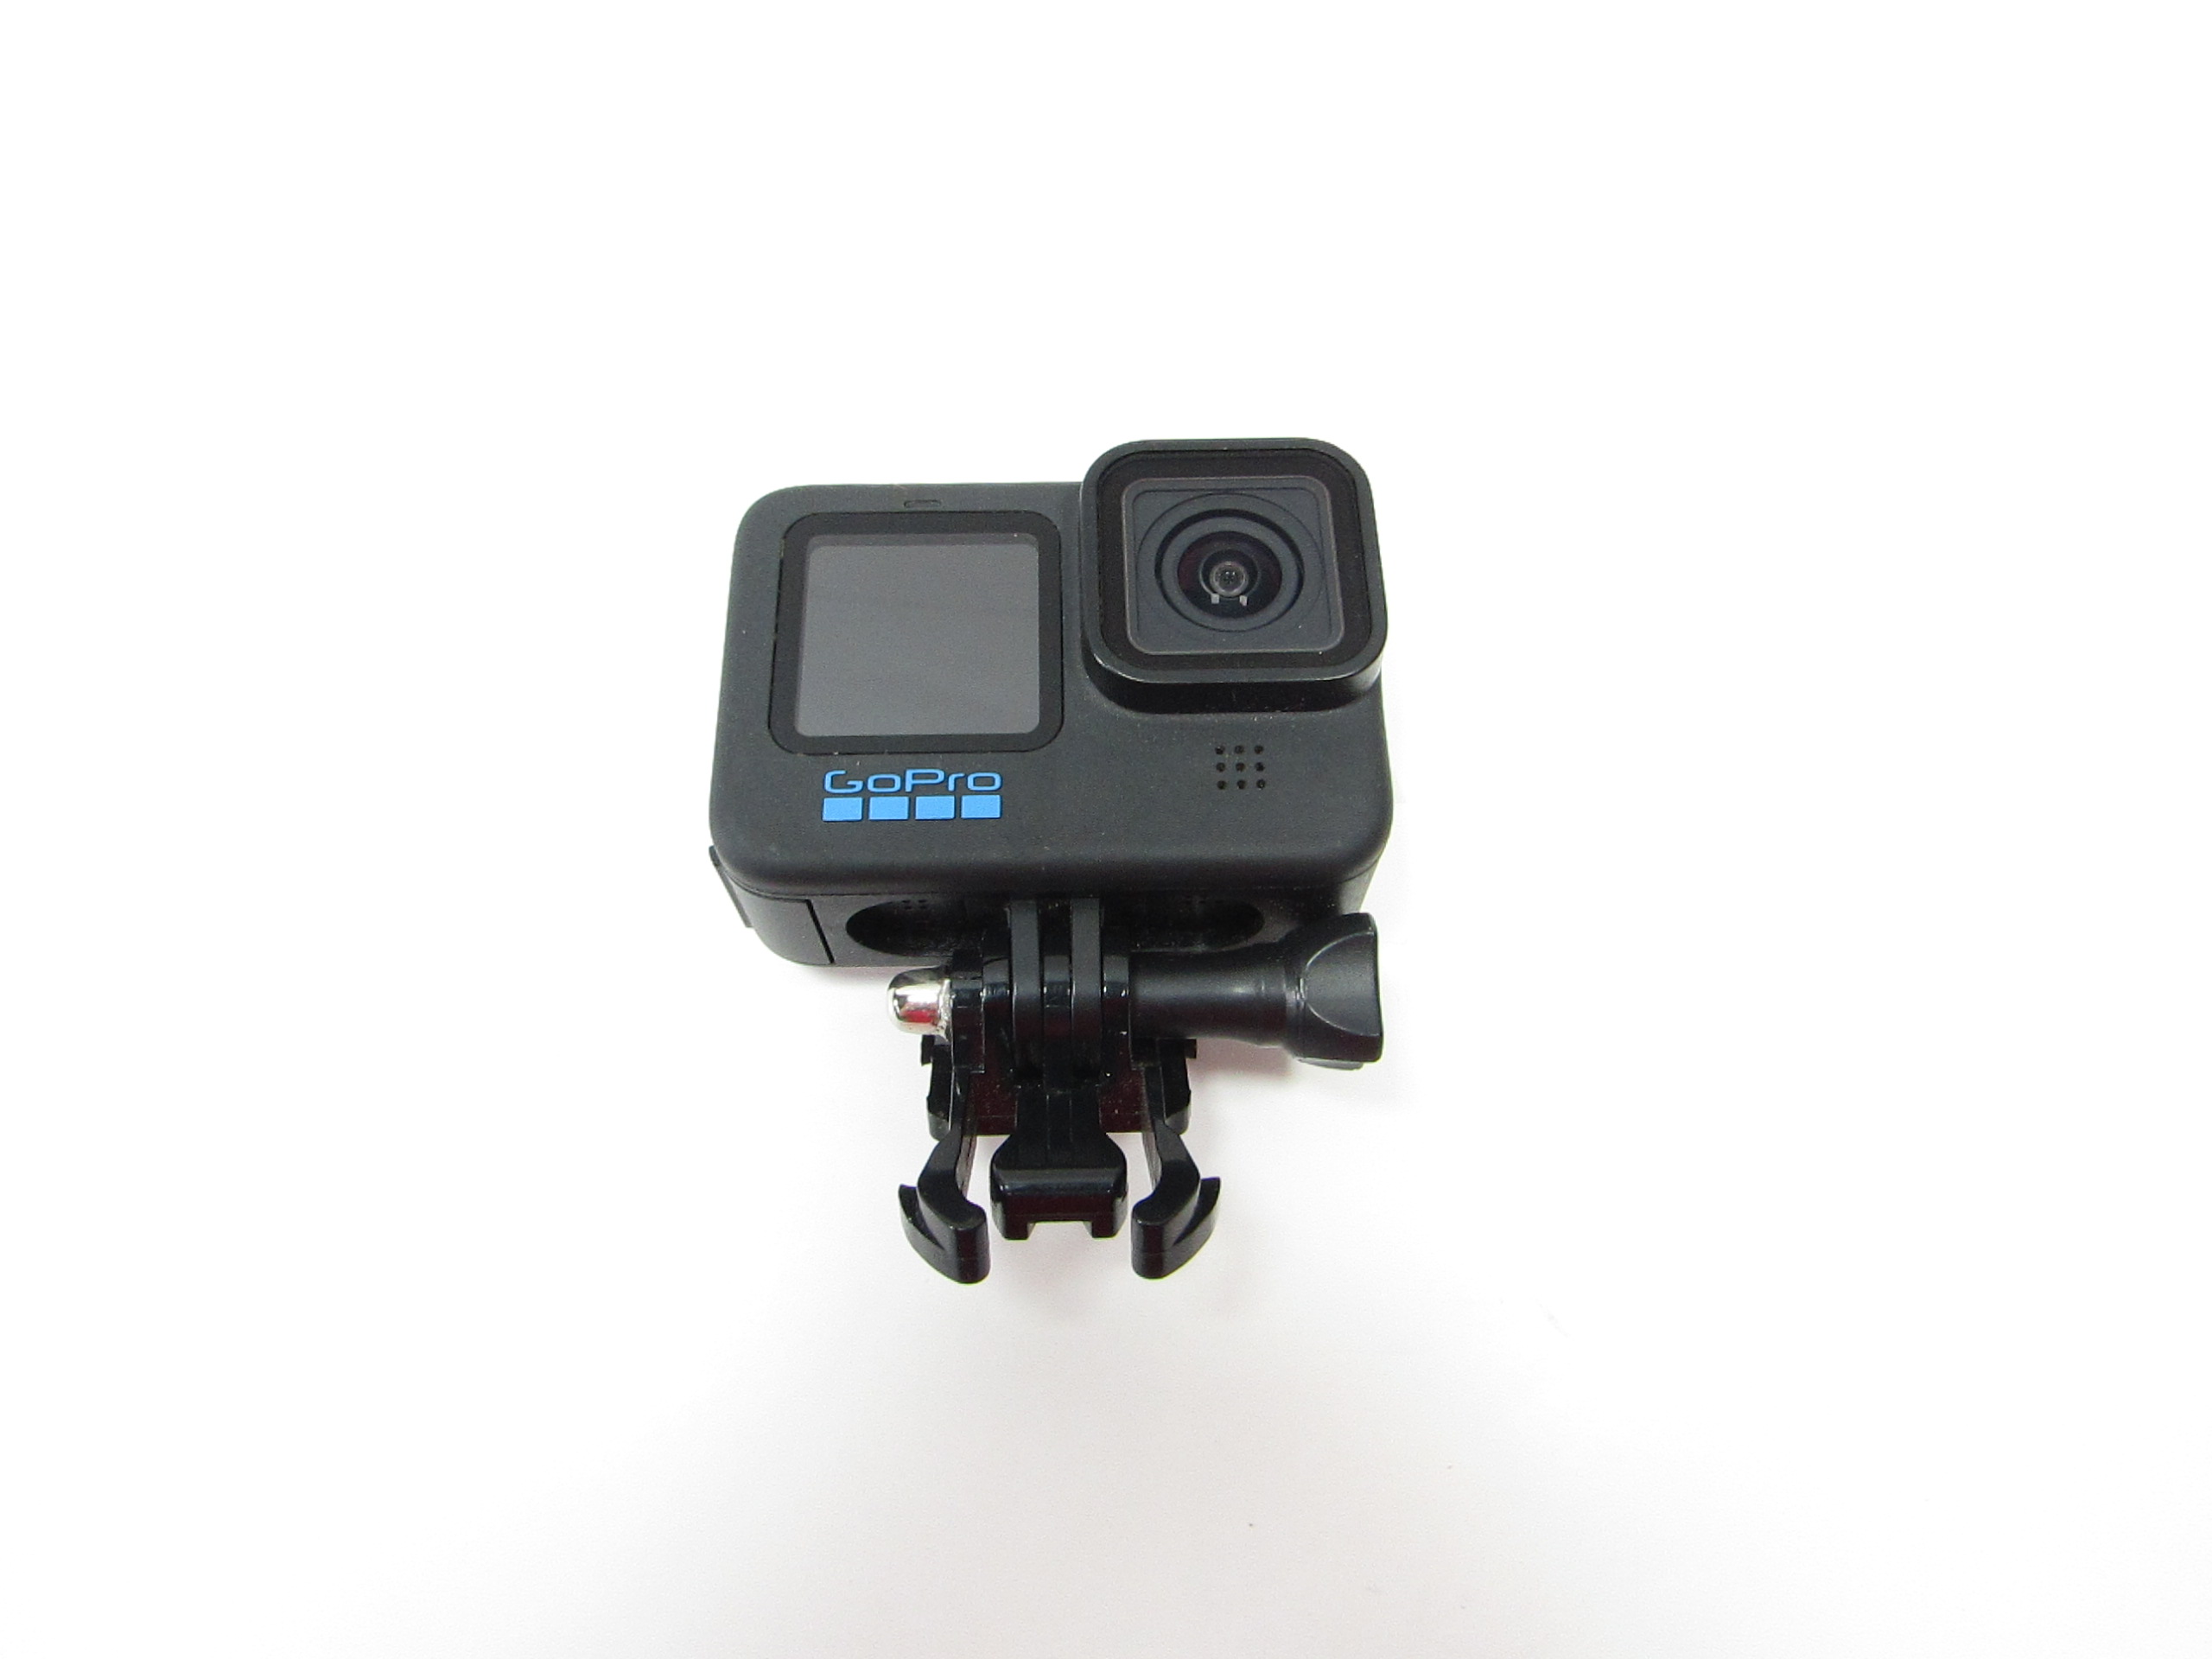  GoPro HERO10 Black - Waterproof Action Camera with